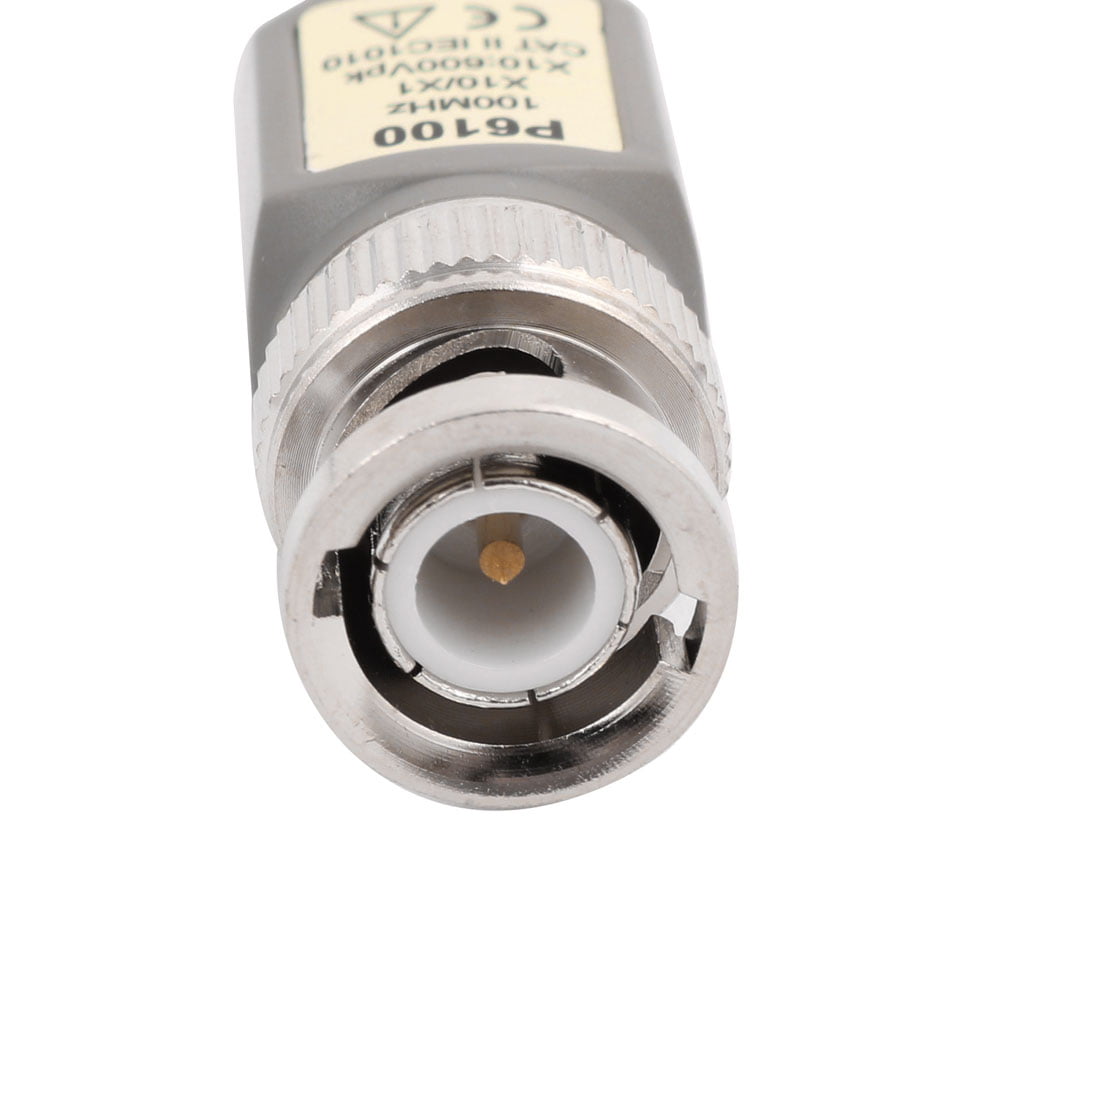 P6100 100MHz Oscilloscope Scope Analyzer Clip Probe Test Leads Kit Tools Gray we